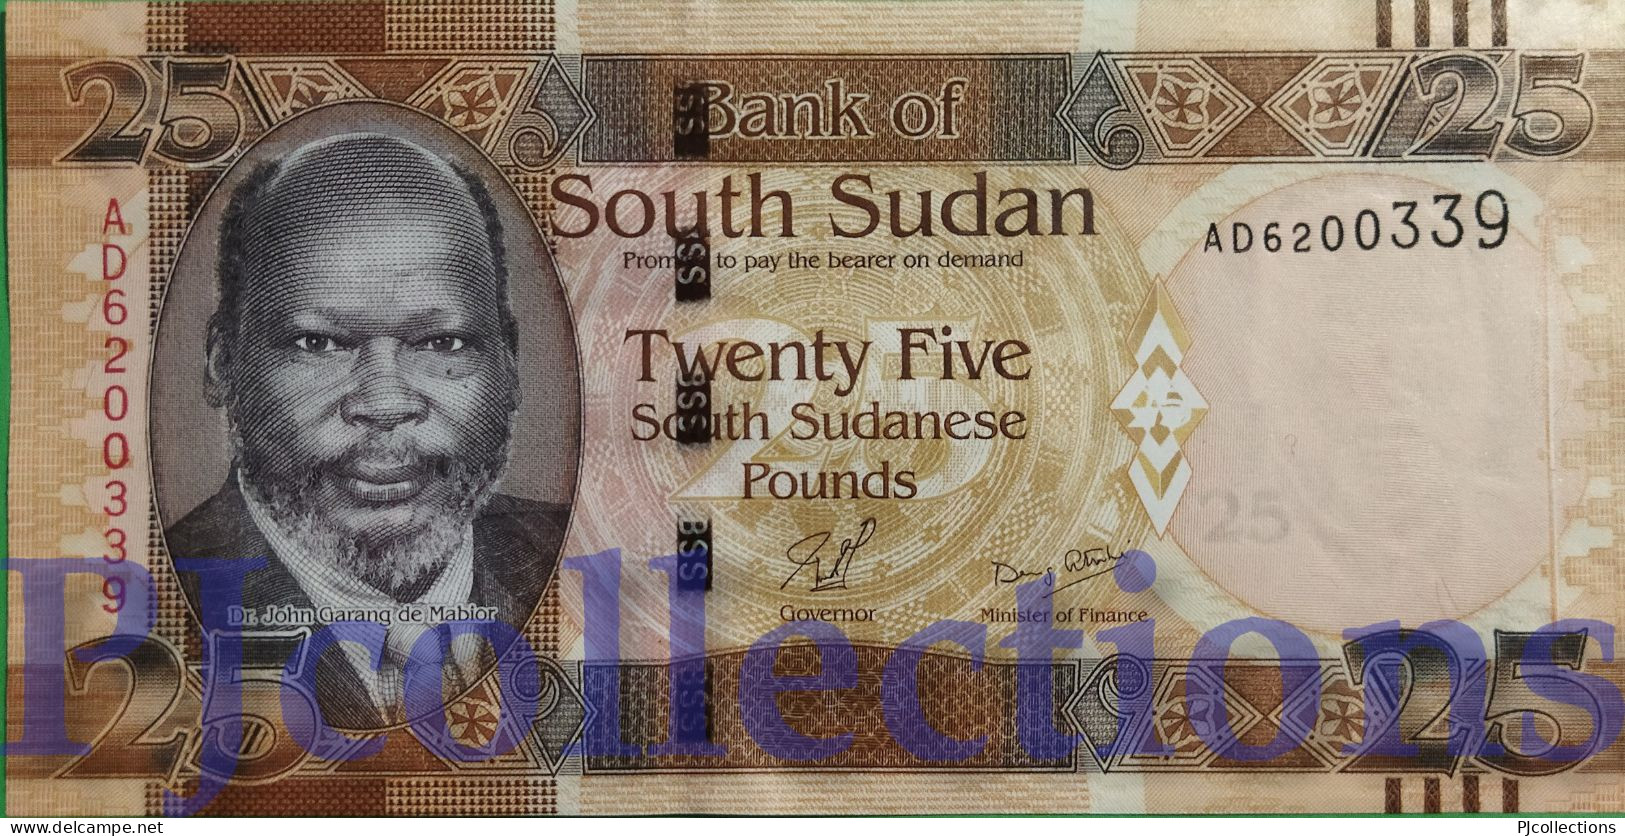 SOUTH SUDAN 25 POUNDS 2011 PICK 8 UNC - Südsudan